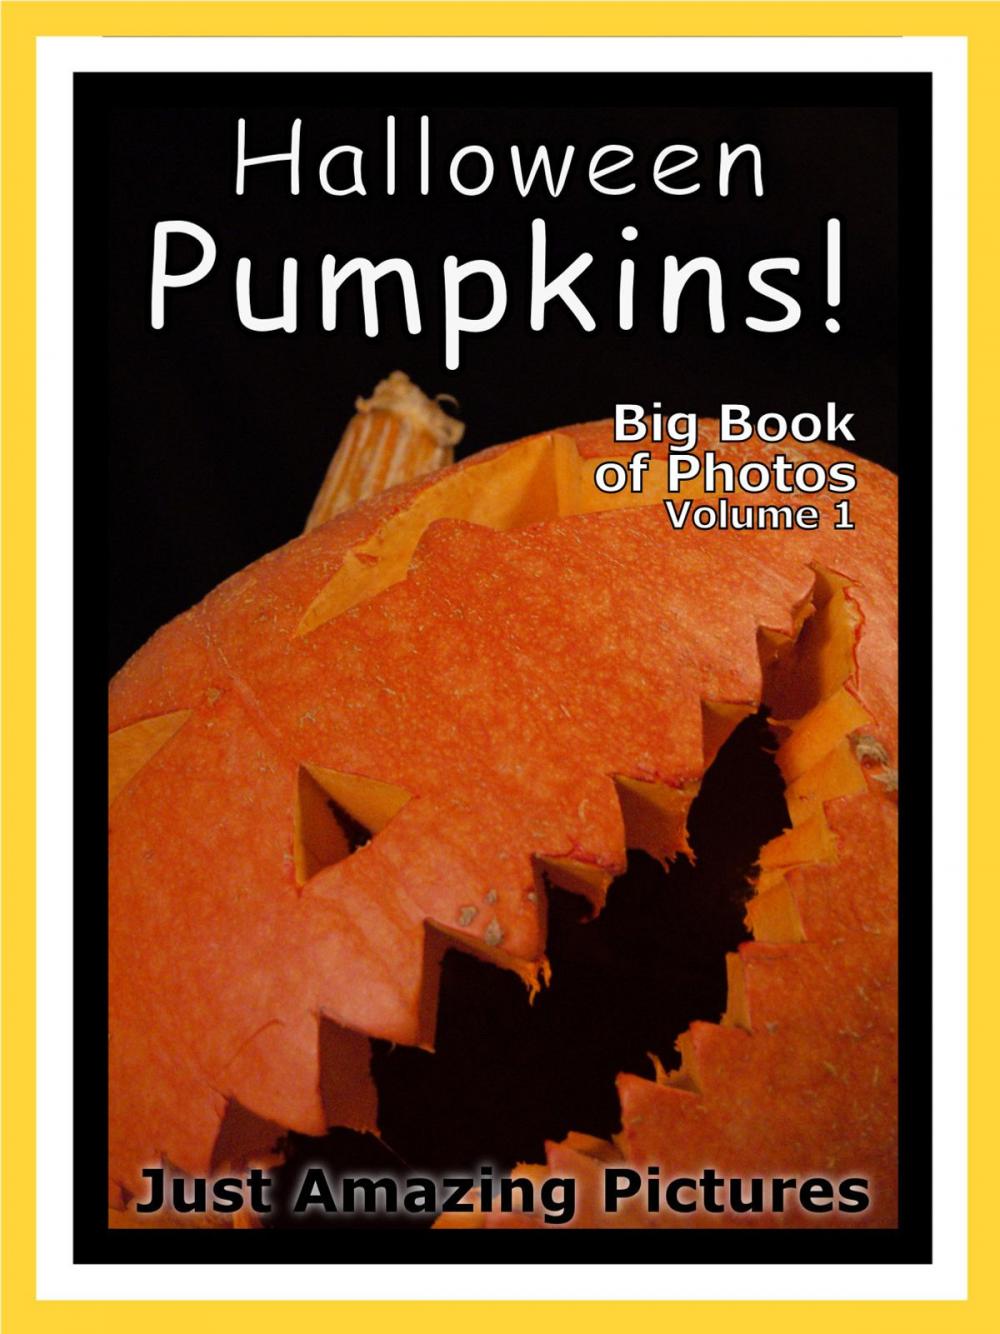 Big bigCover of Just Halloween Pumpkin Photos! Big Book of Photographs & Pictures of Pumpkins, Vol. 1